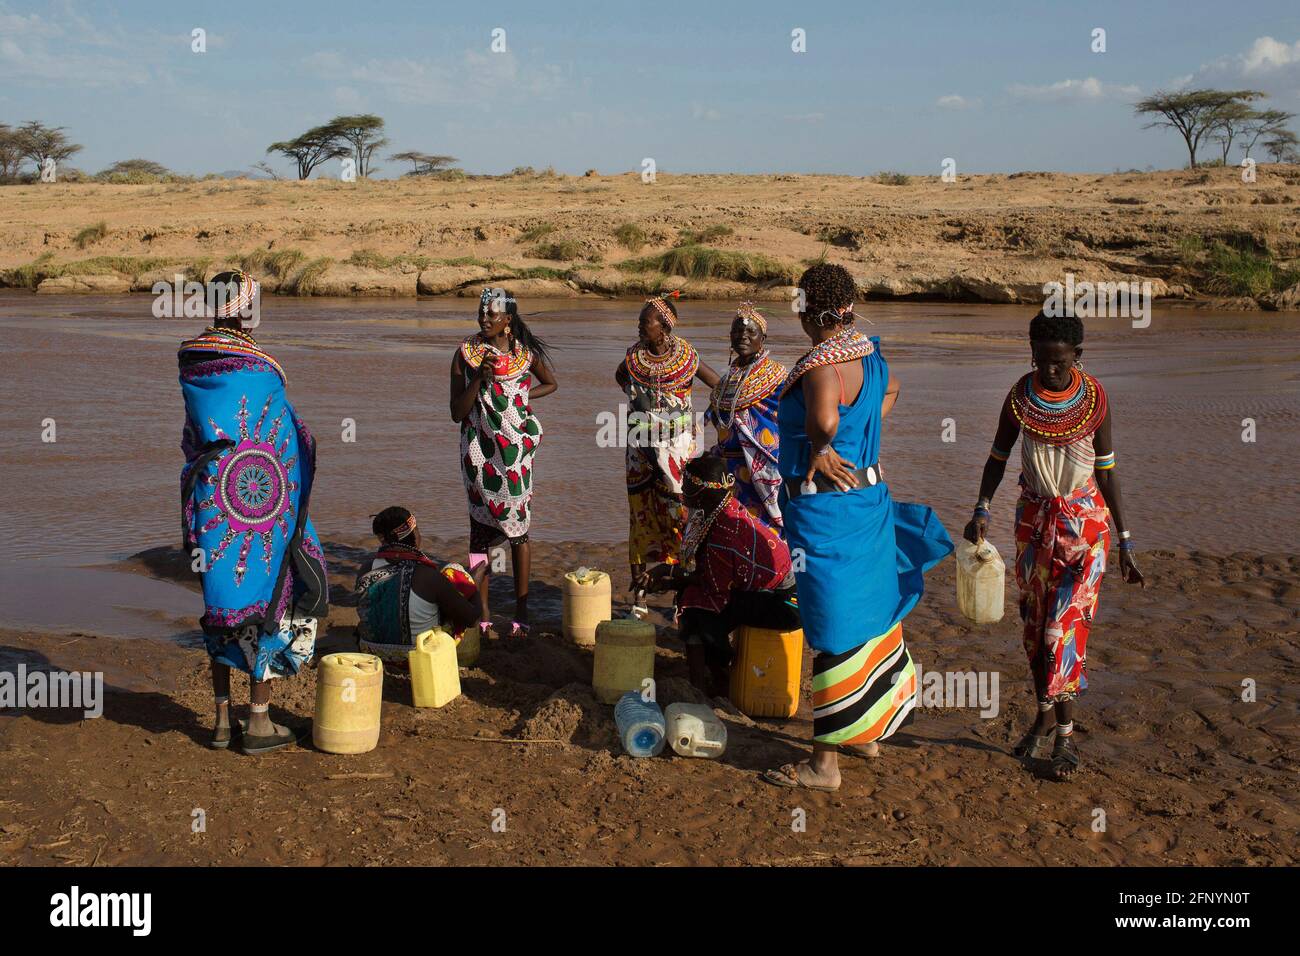 Women collect water from a river near the village of Umoja in Samburu, Kenya on February 19, 2015. Stock Photo